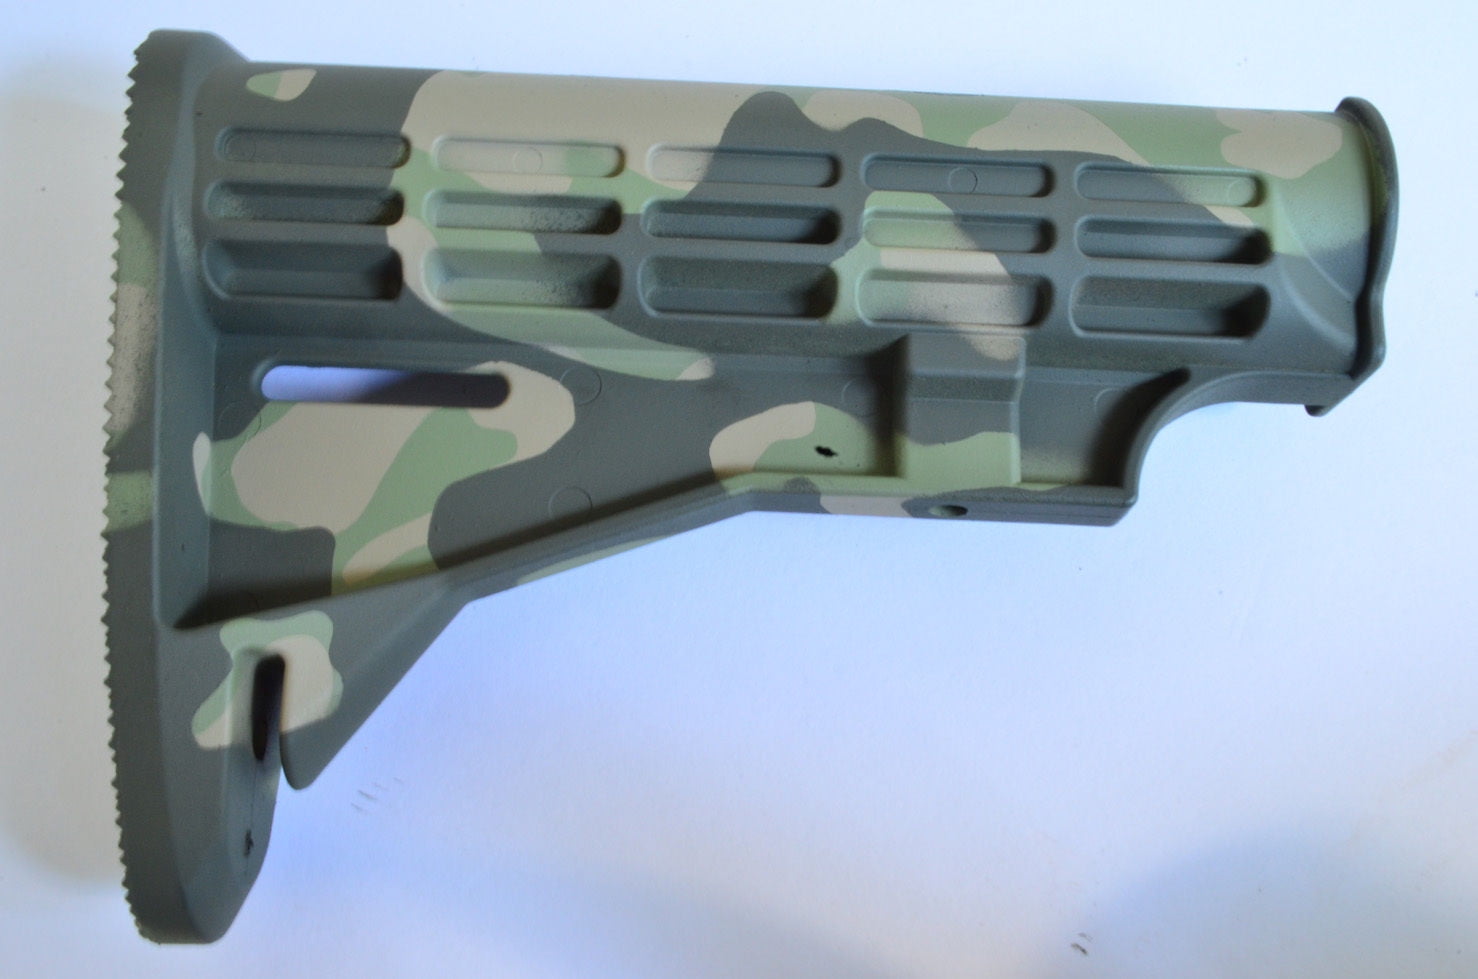  Acid Tactical® 2 Designs Adhesive Sticker Camouflage Airbrush  Spray Paint Duracoat Cerakote Gun Rifle Camo Stencils - Army Tiger Stripe  CAMO : Arts, Crafts & Sewing